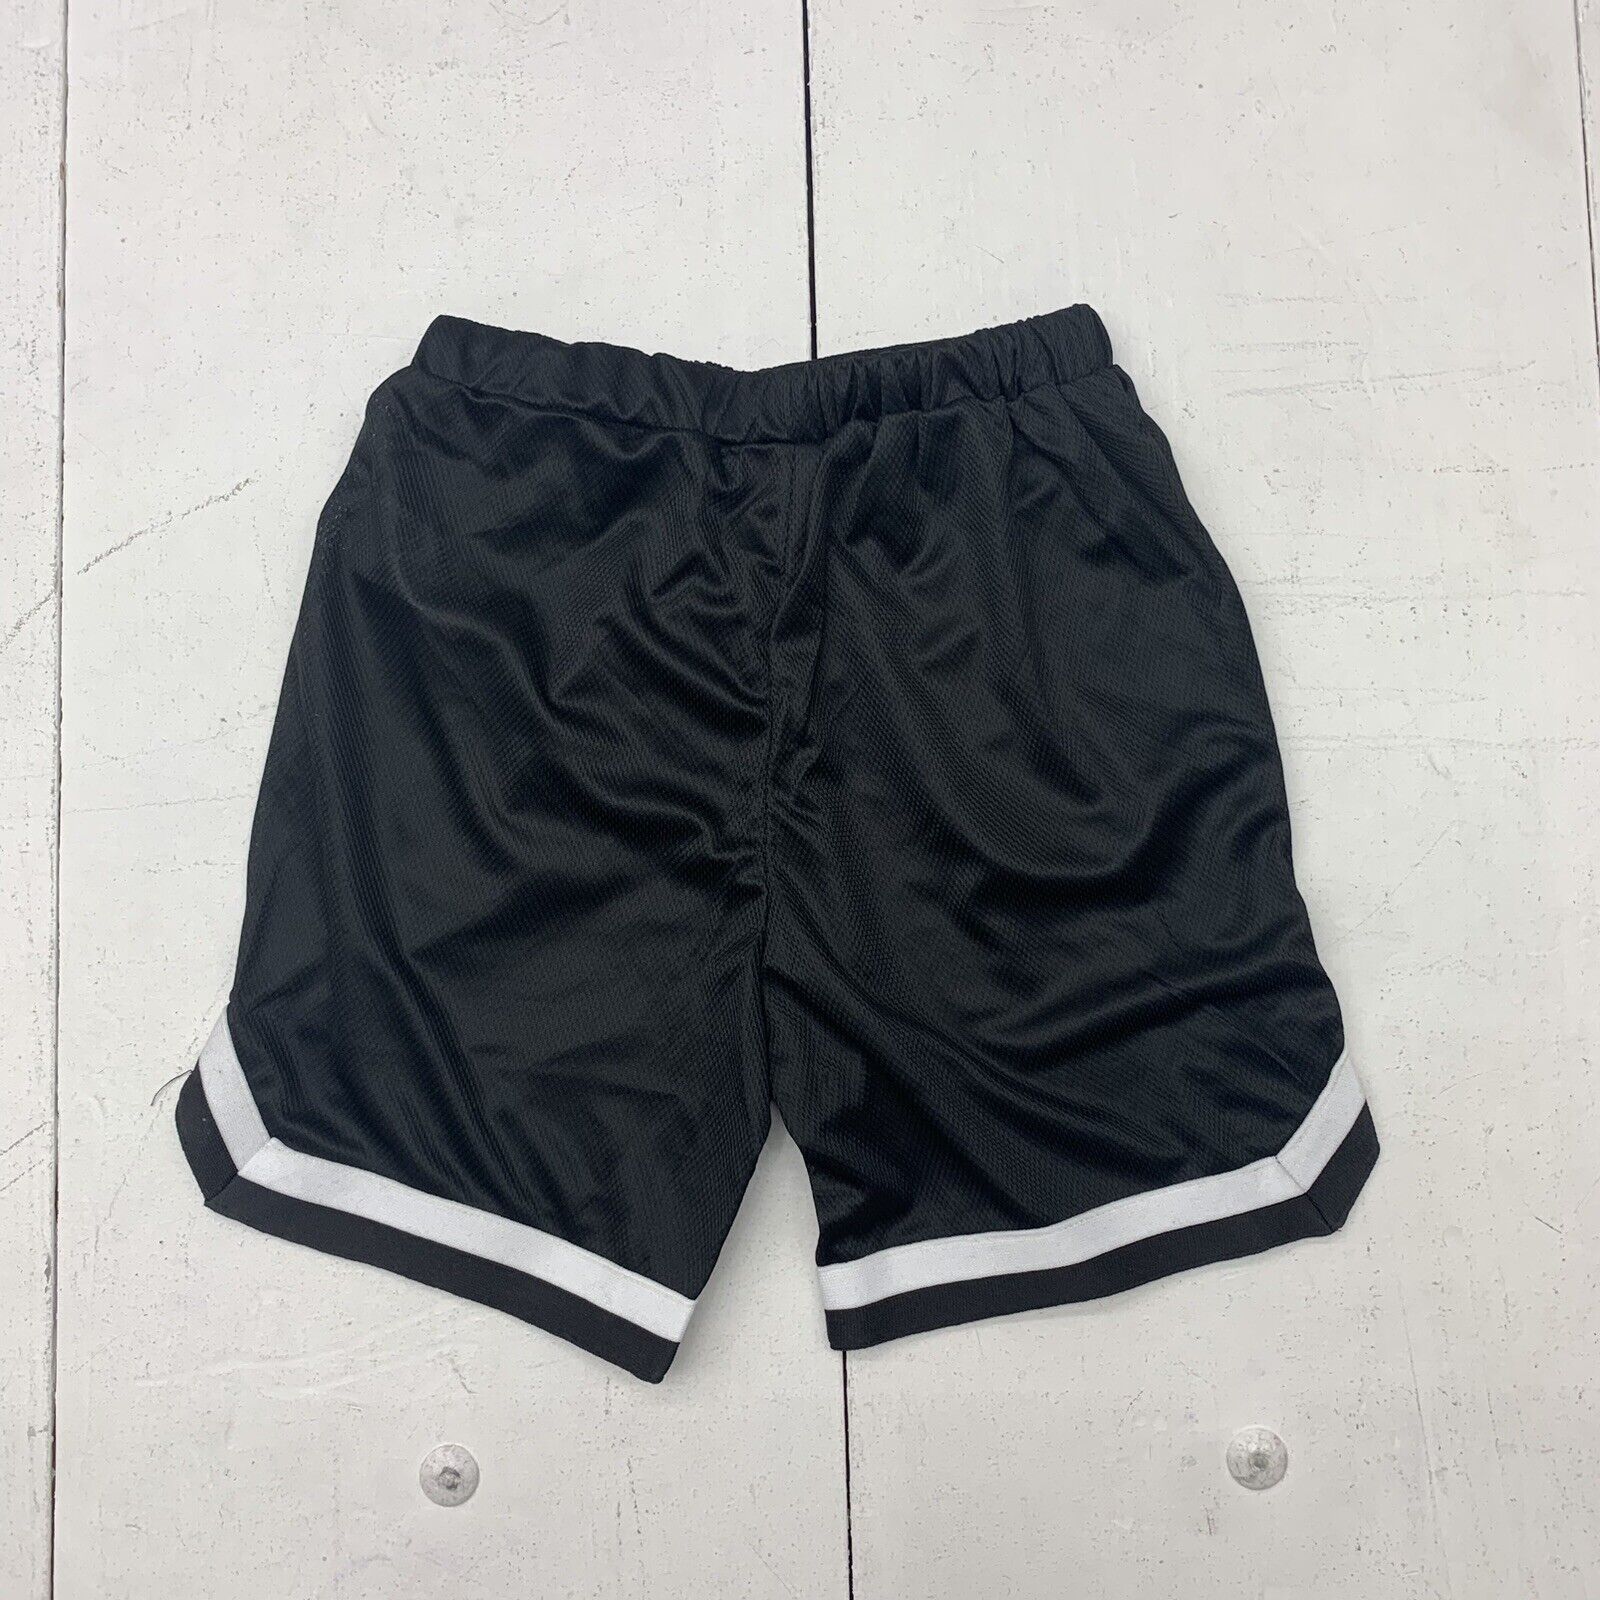 Shein Girls Black Los Angeles Mesh Athletic Shorts Size 7 - beyond